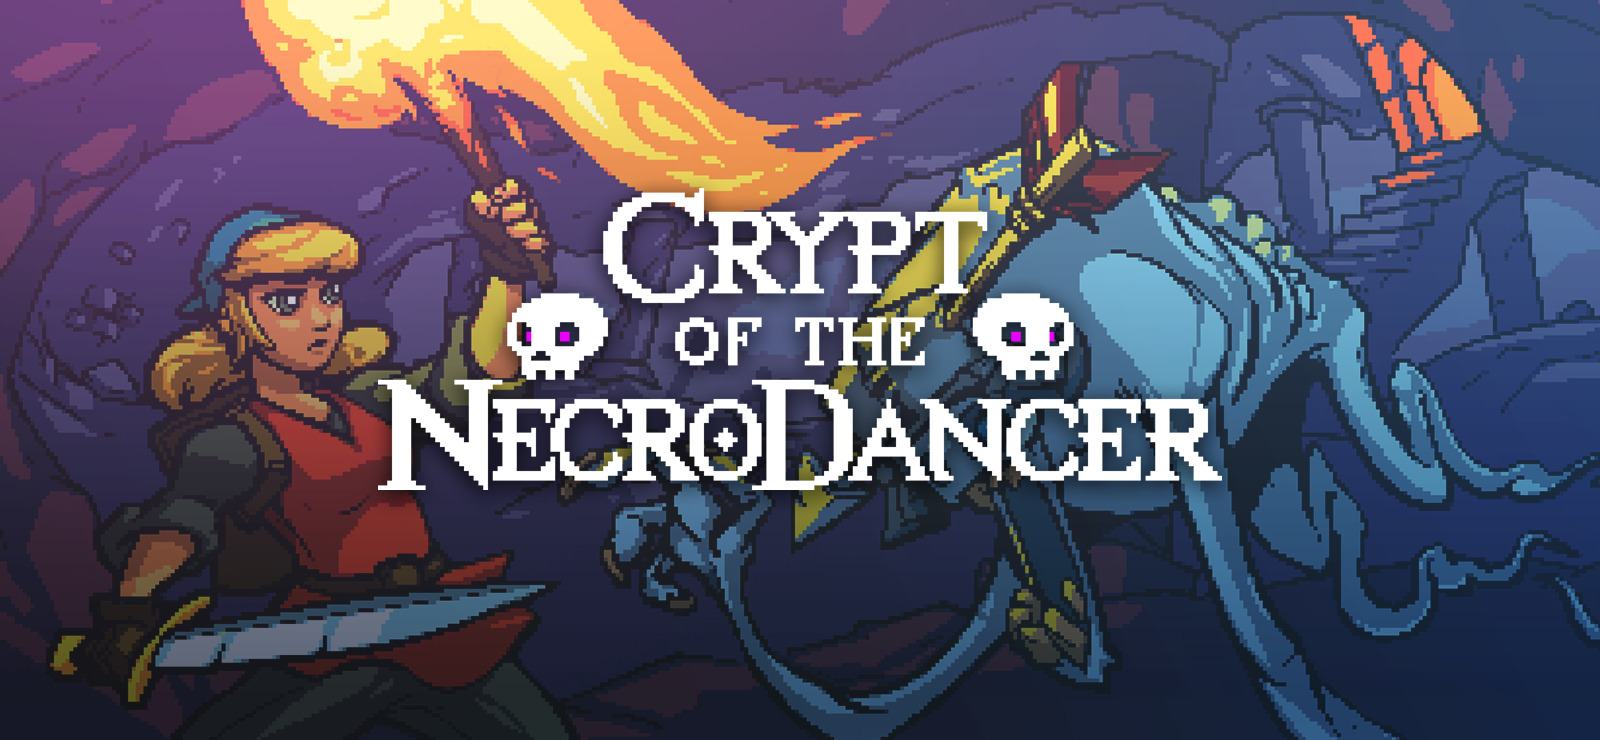 download free crypt of the necrodancer cadence